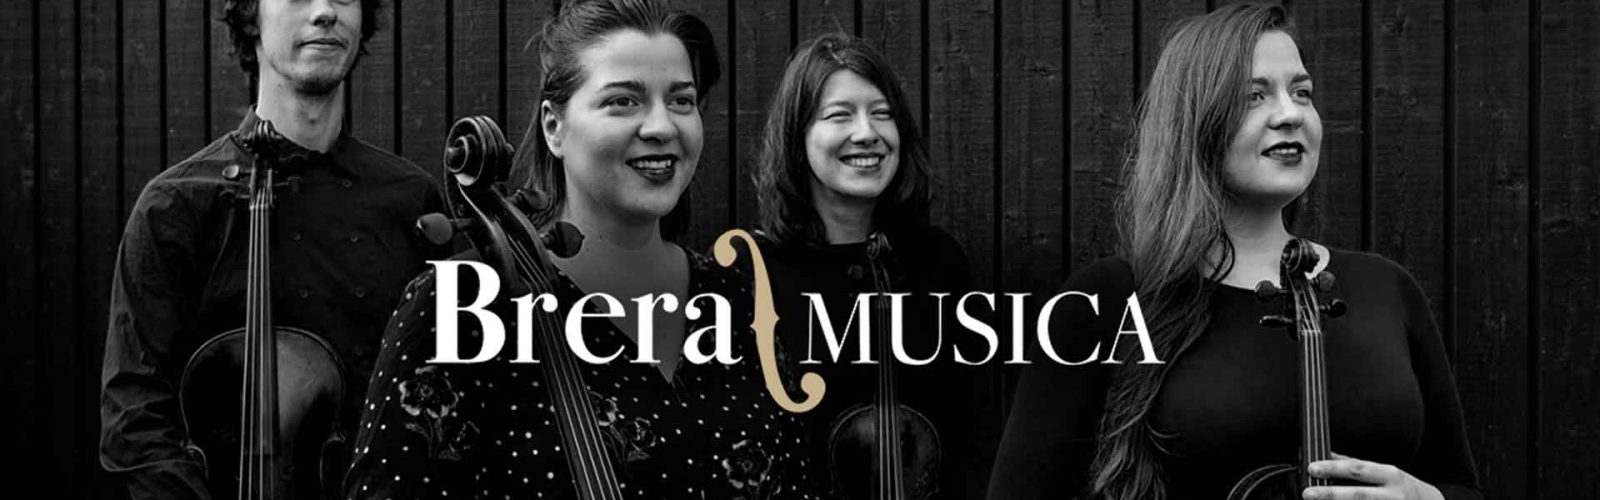 Brera/Musica online<br>Third Musical Thursday